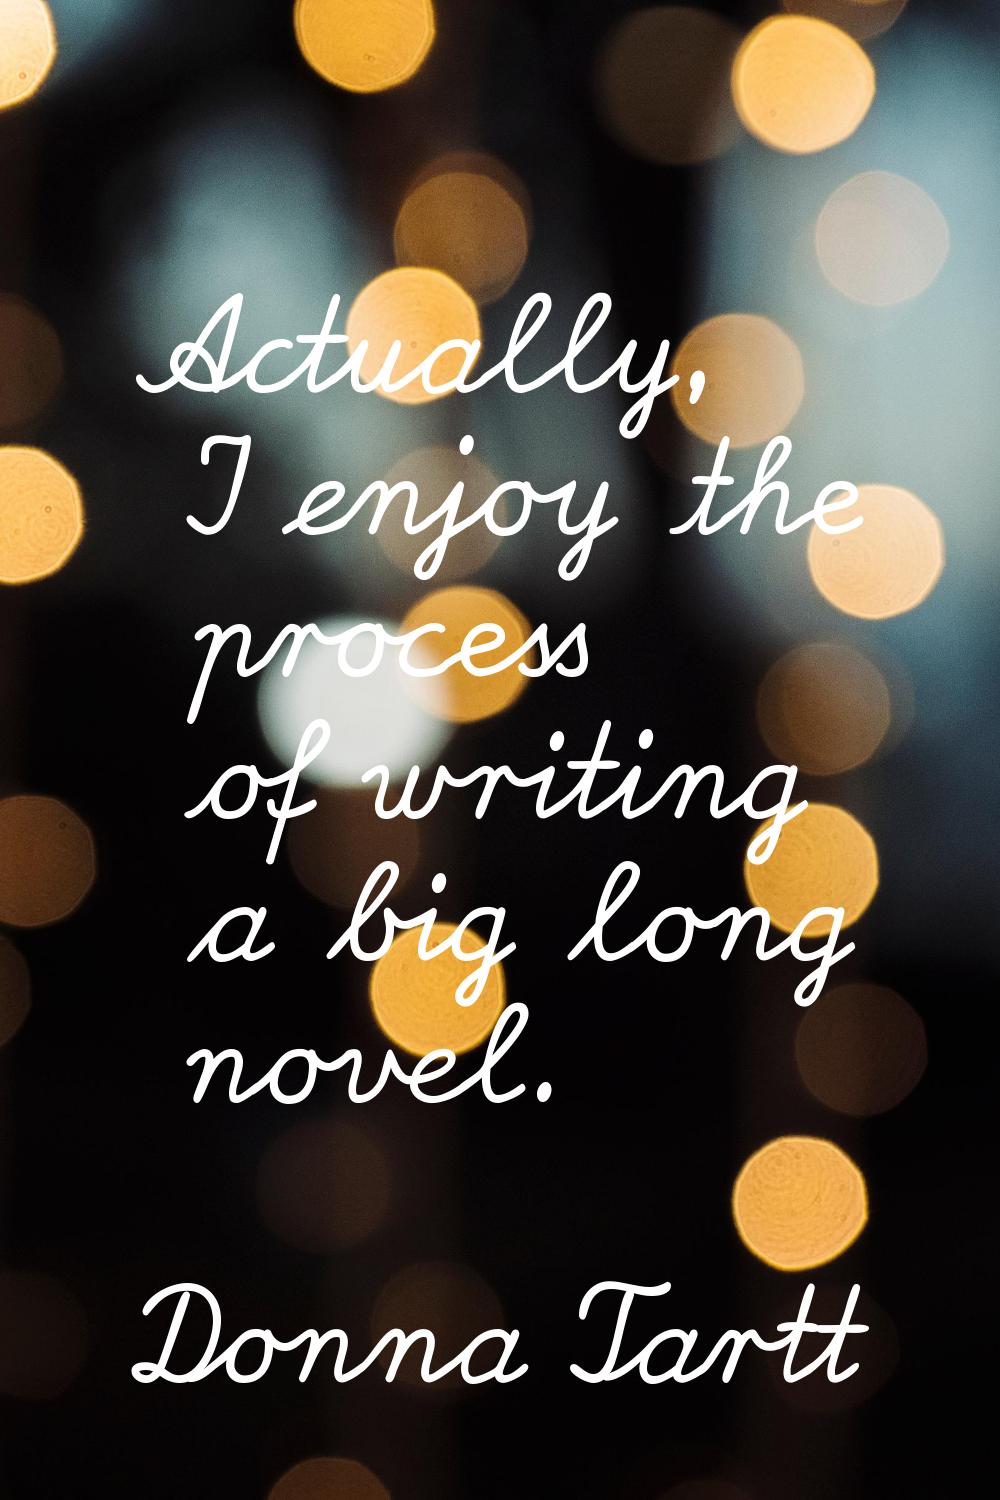 Actually, I enjoy the process of writing a big long novel.